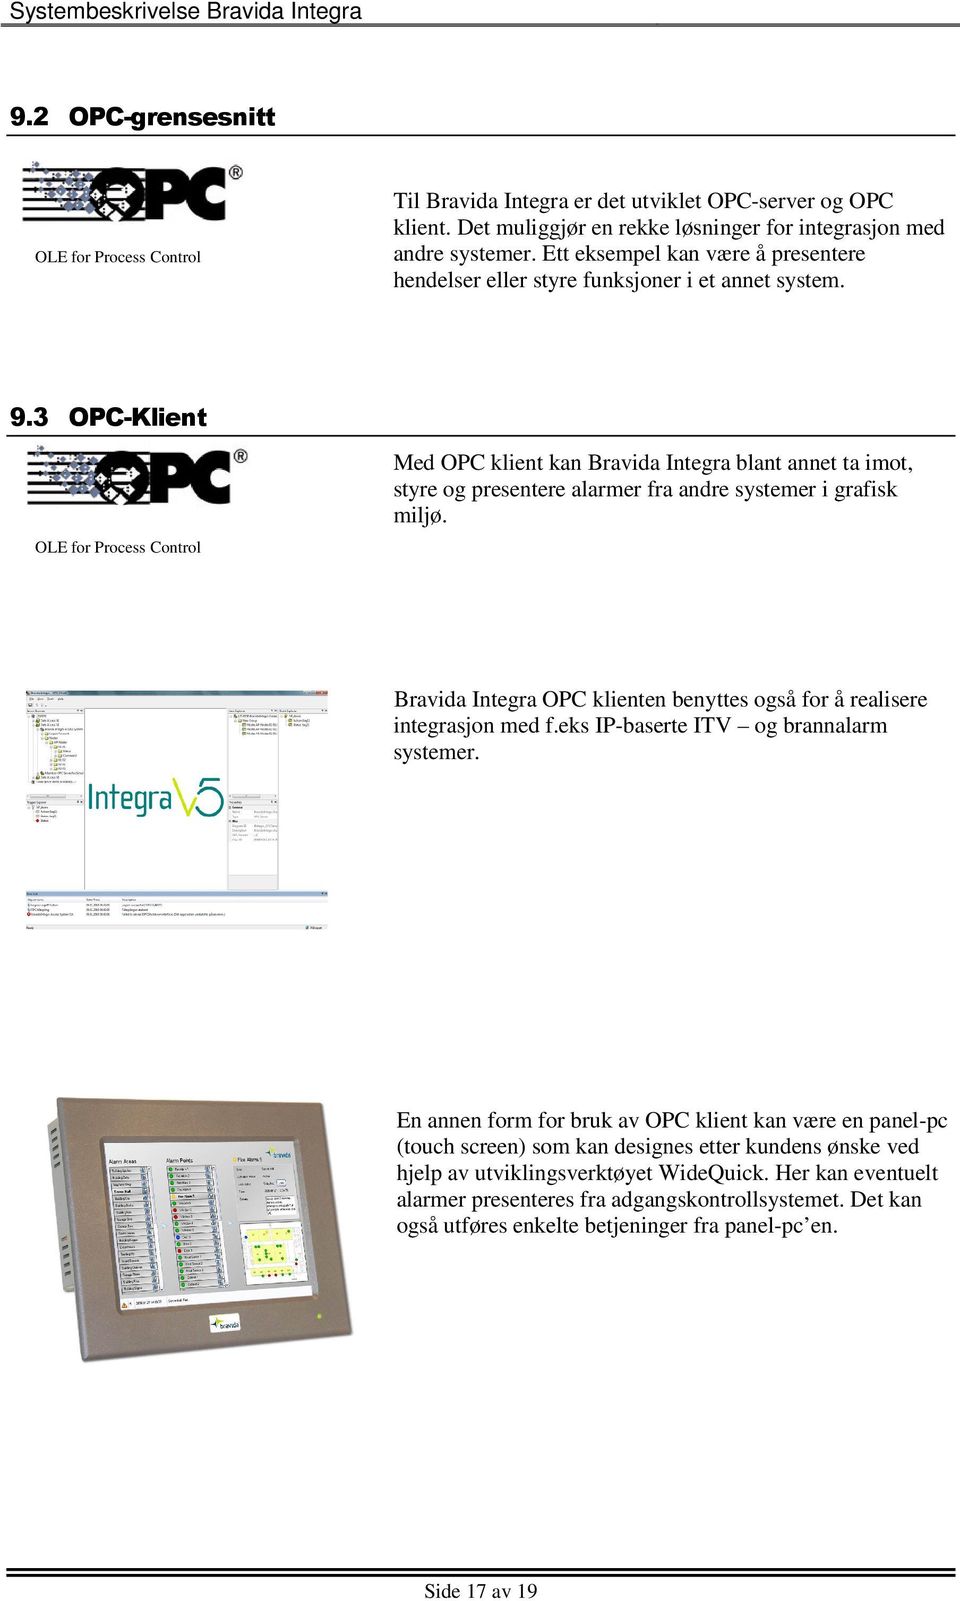 3 OPC-Klient OLE for Process Control Med OPC klient kan Bravida Integra blant annet ta imot, styre og presentere alarmer fra andre systemer i grafisk miljø.